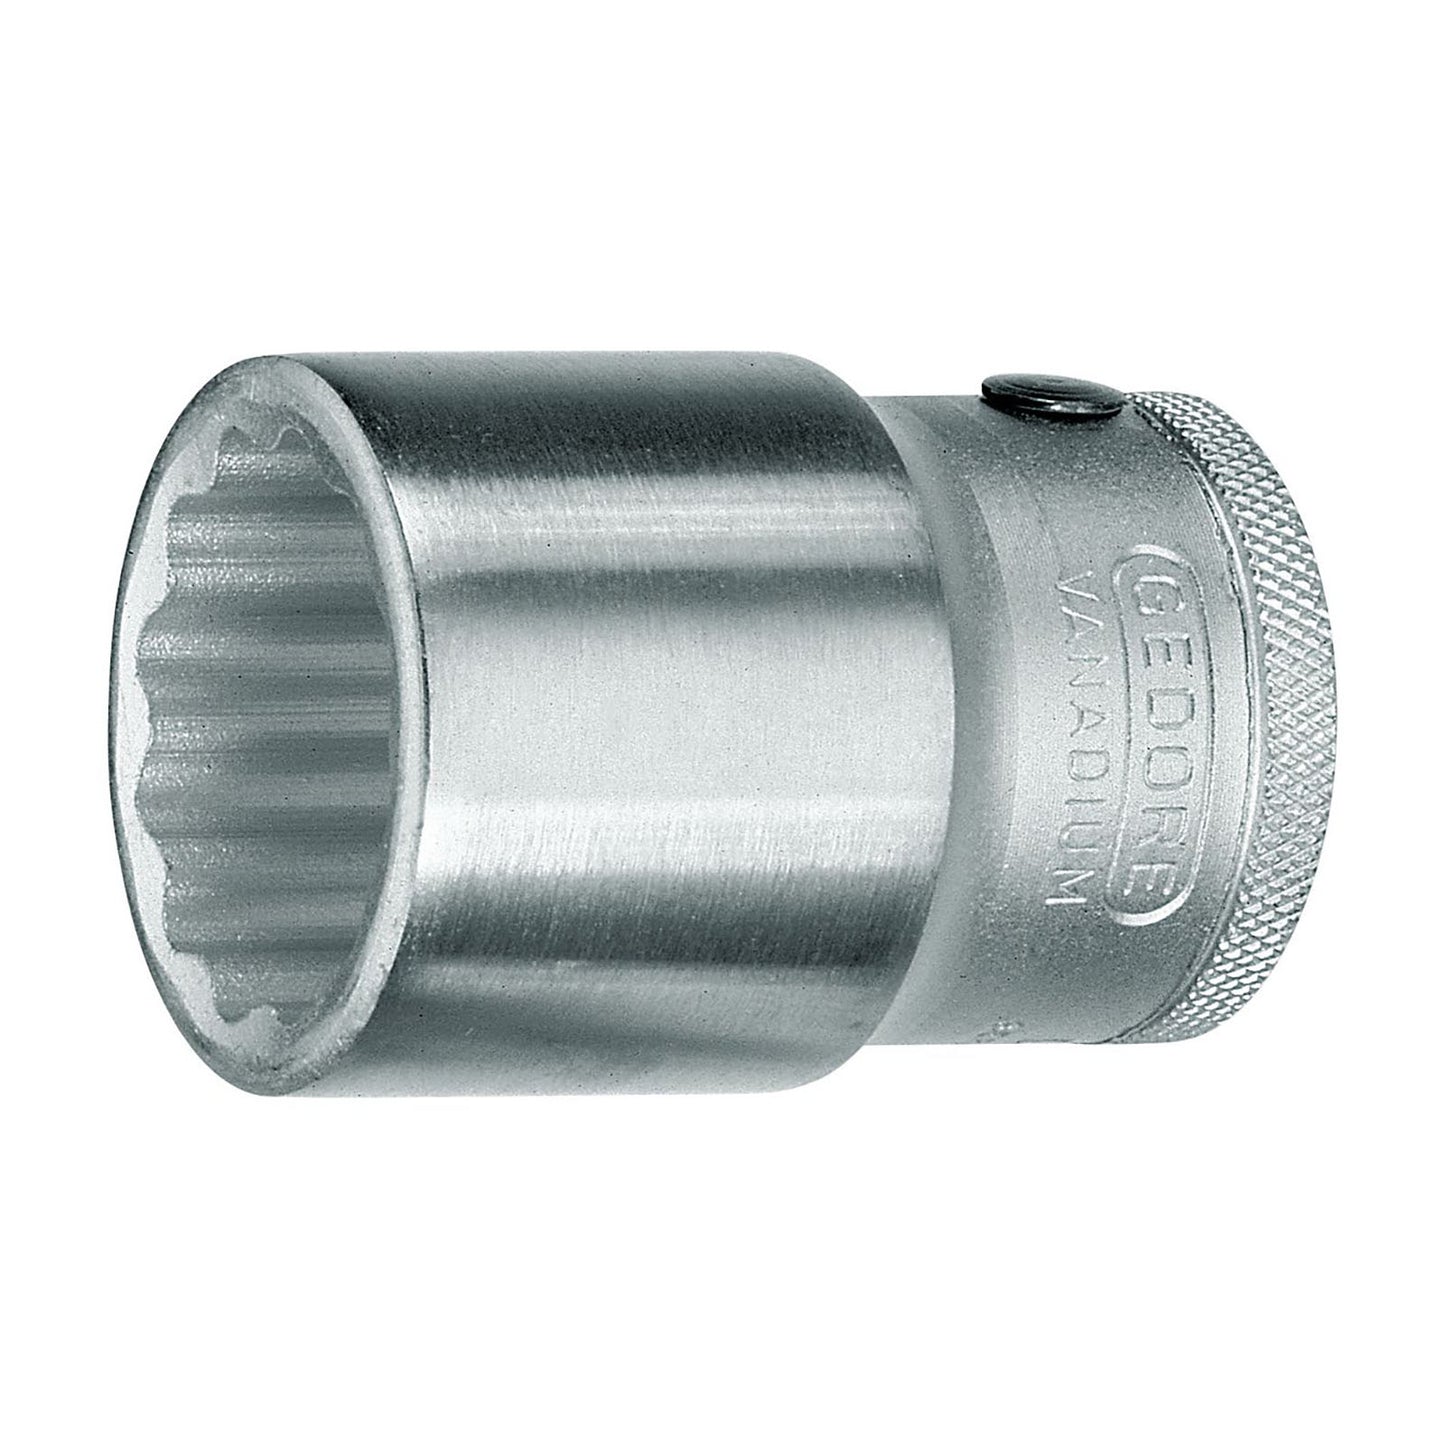 GEDORE D 32 32 - Vaso Unit Drive 3/4", 32 mm (6272750)